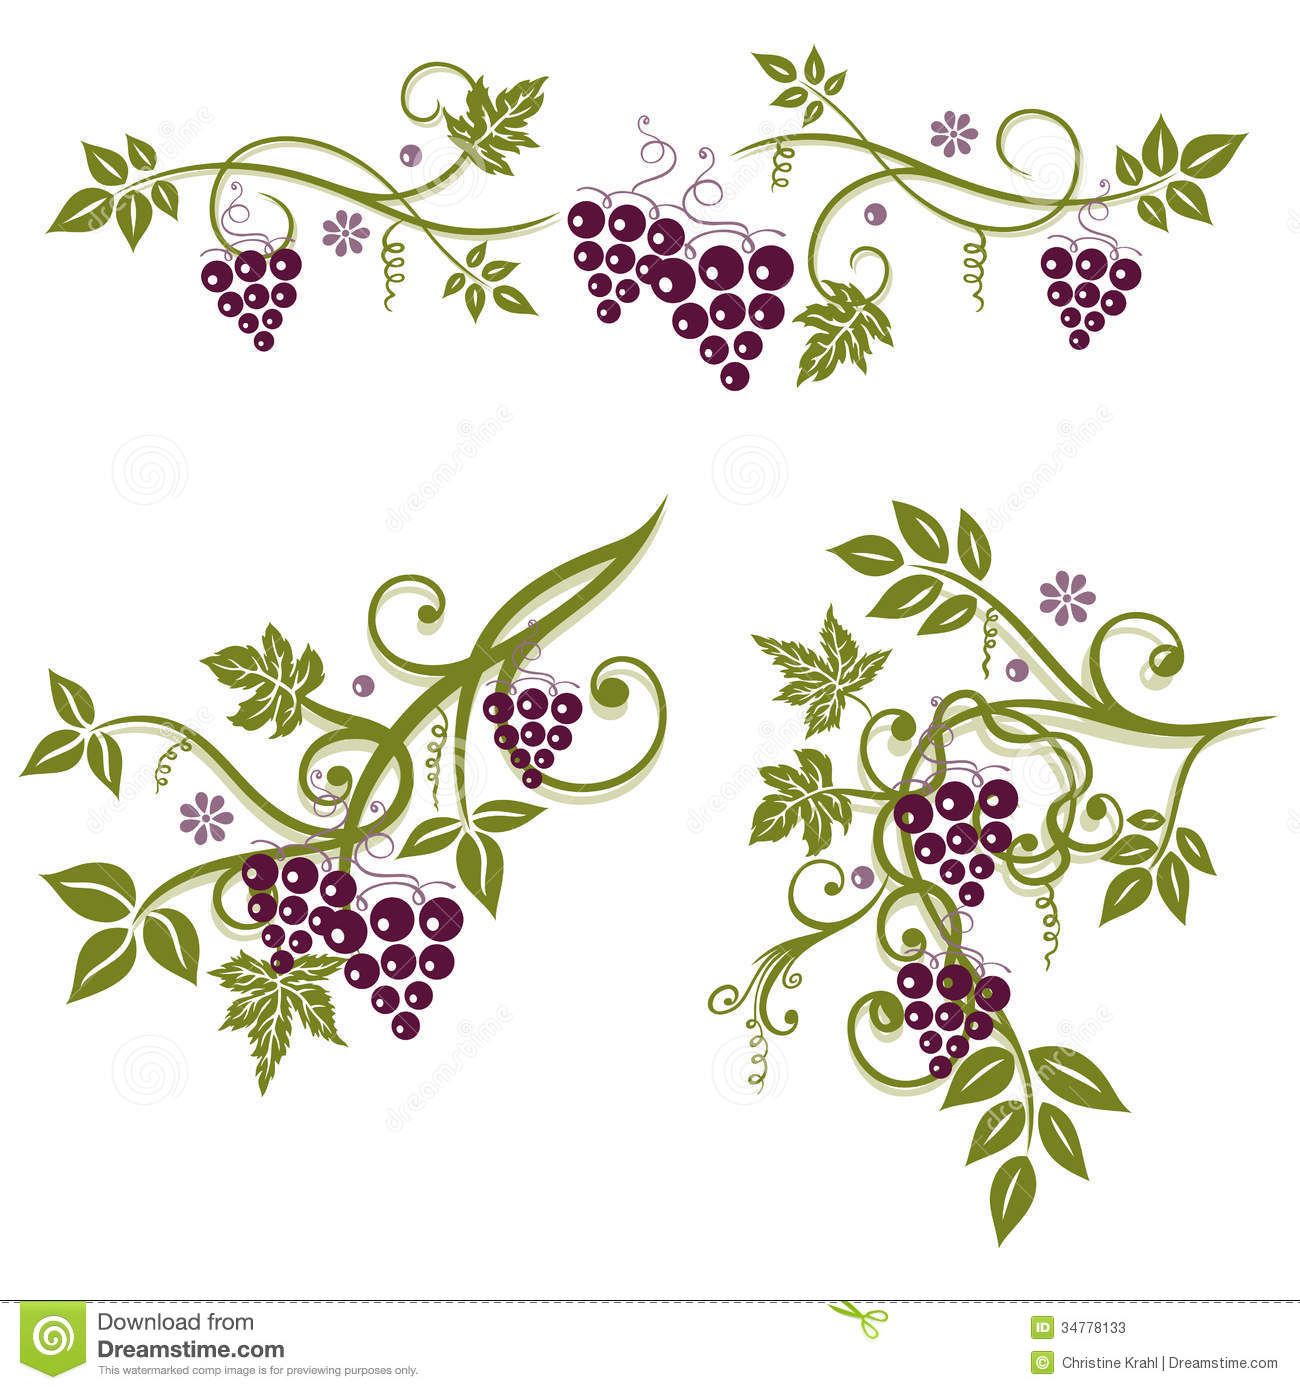 grapevine clipart flower vines